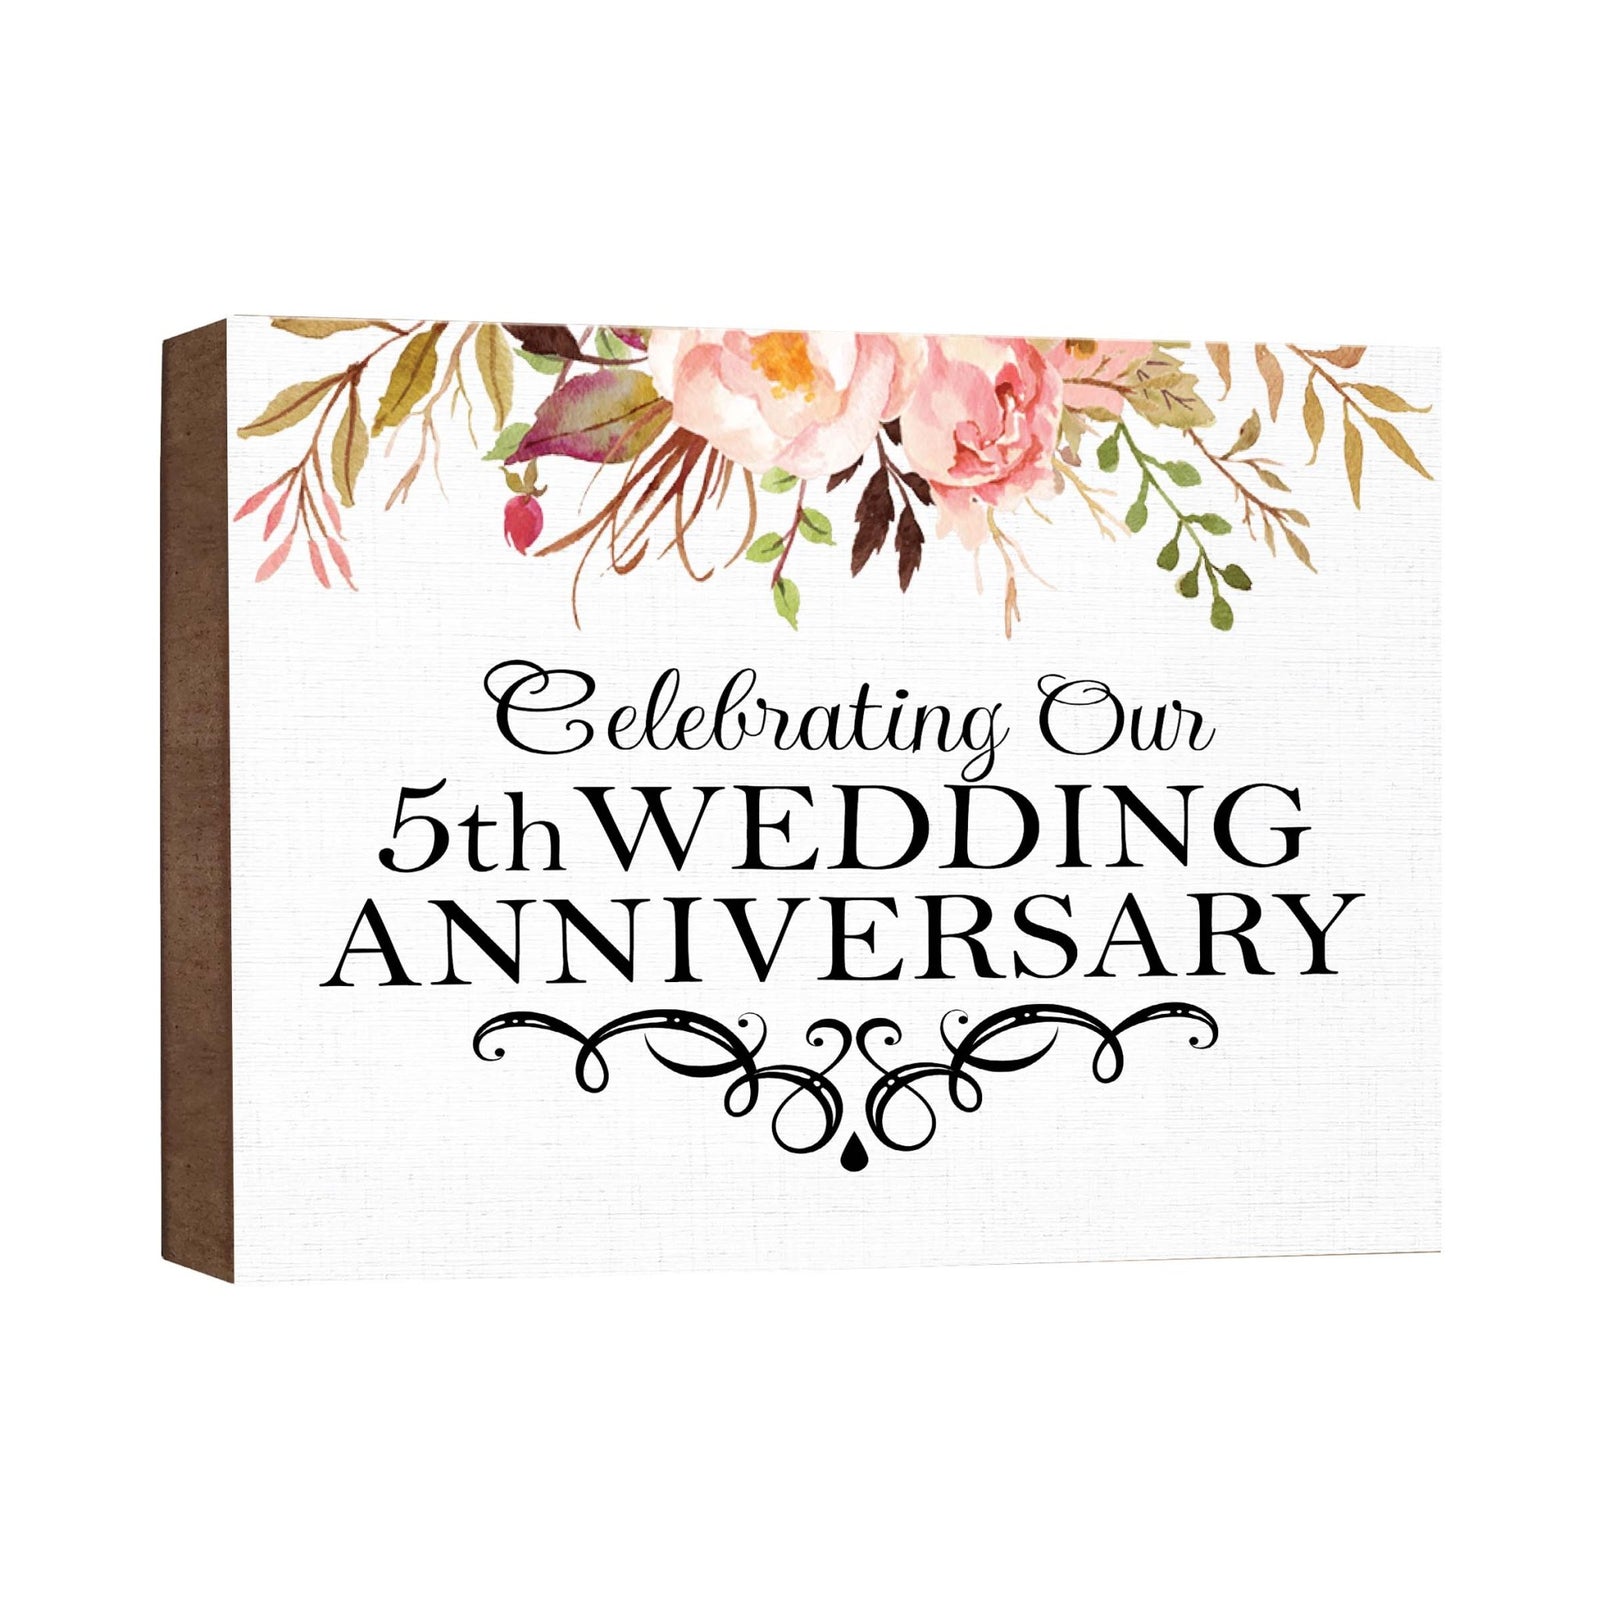 5th Wedding Anniversary Wall Plaque - Celebrating - LifeSong Milestones